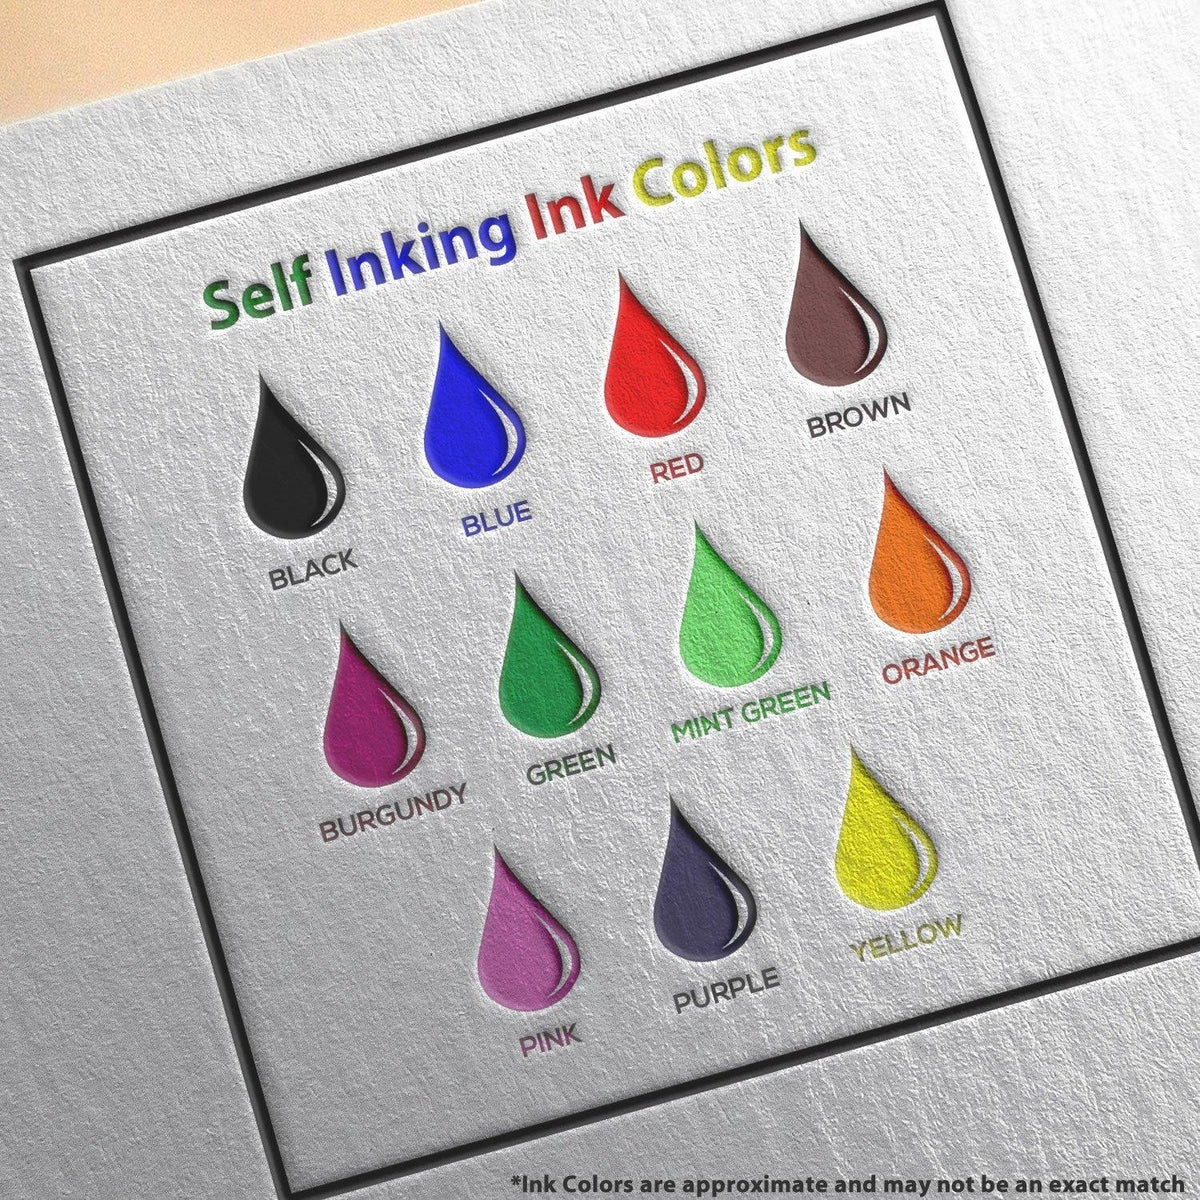 Self-Inking Expres Entrega Inmedia Stamp - Engineer Seal Stamps - Brand_Trodat, Impression Size_Small, Stamp Type_Self-Inking Stamp, Type of Use_Office, Type of Use_Postal &amp; Mailing